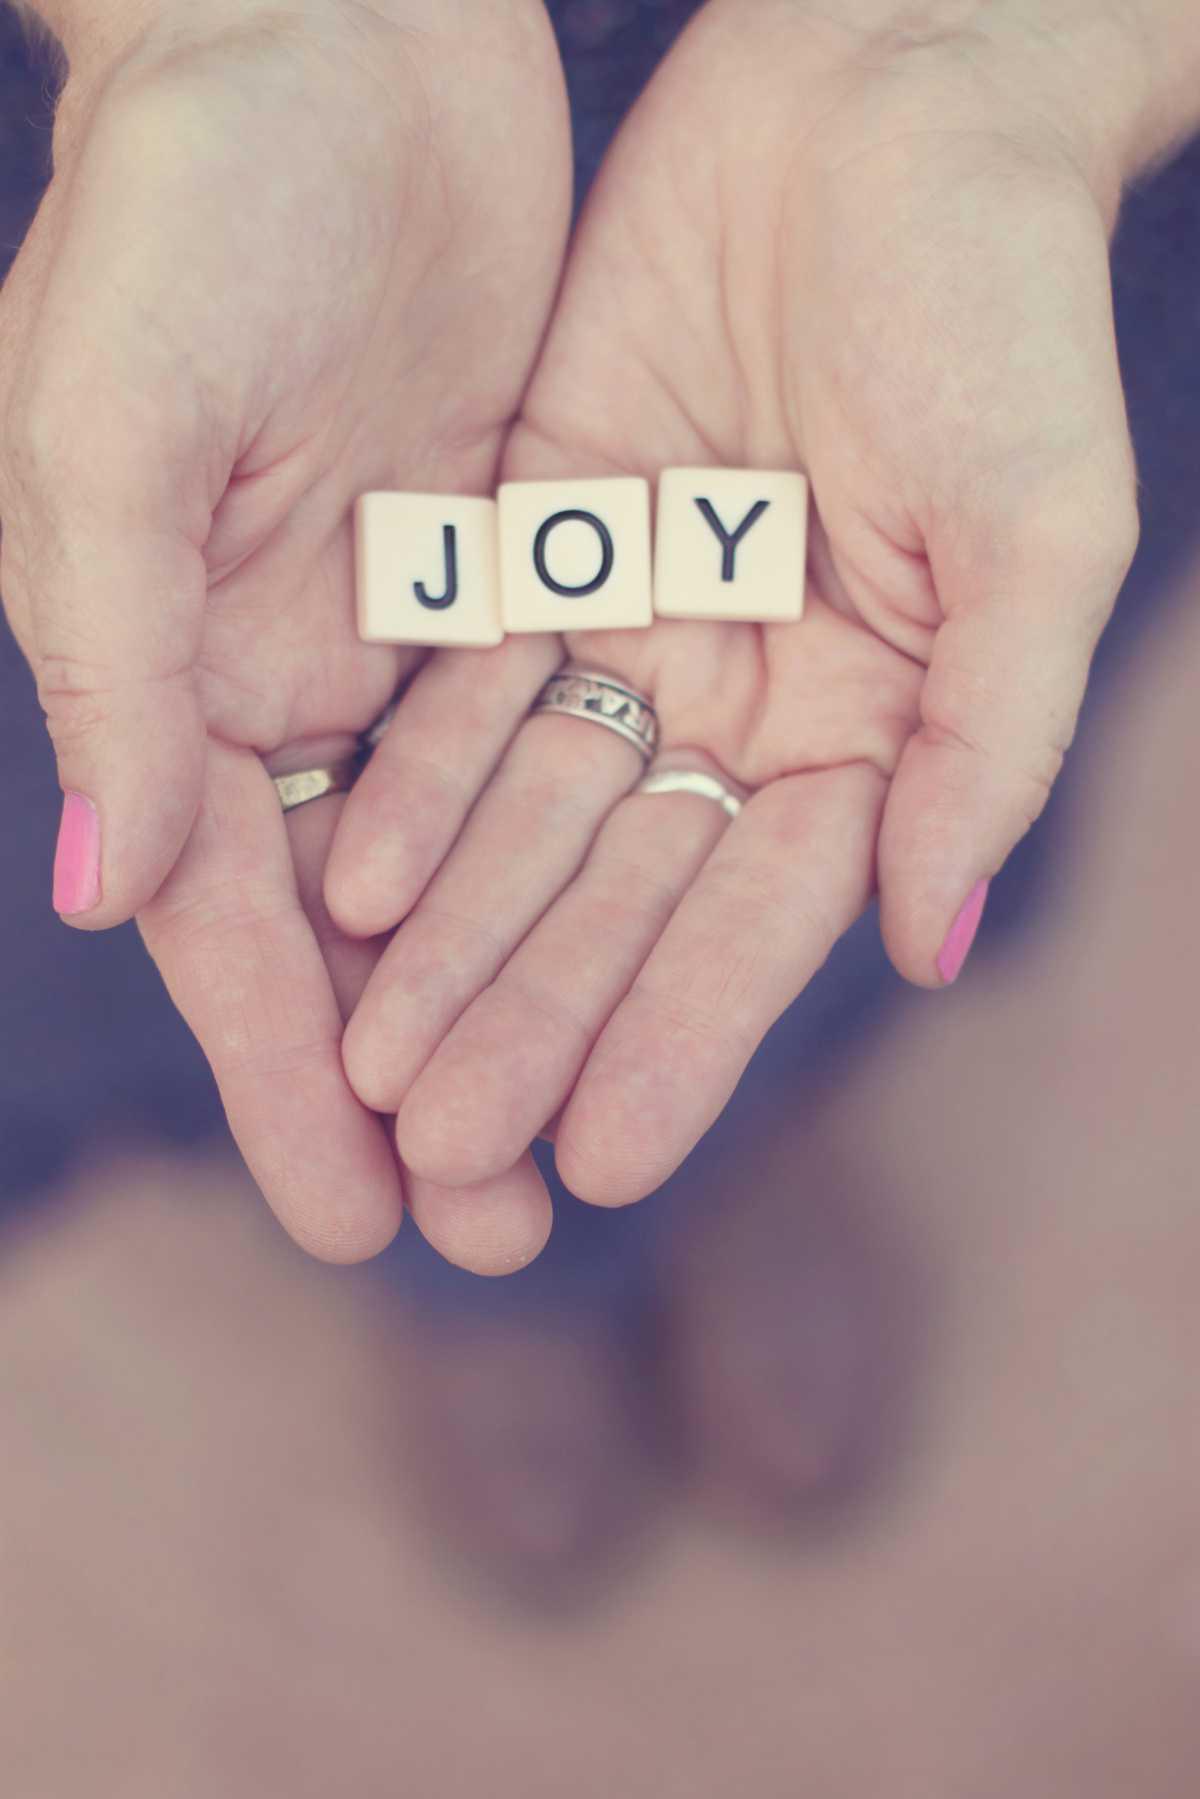 Joy or Happiness?